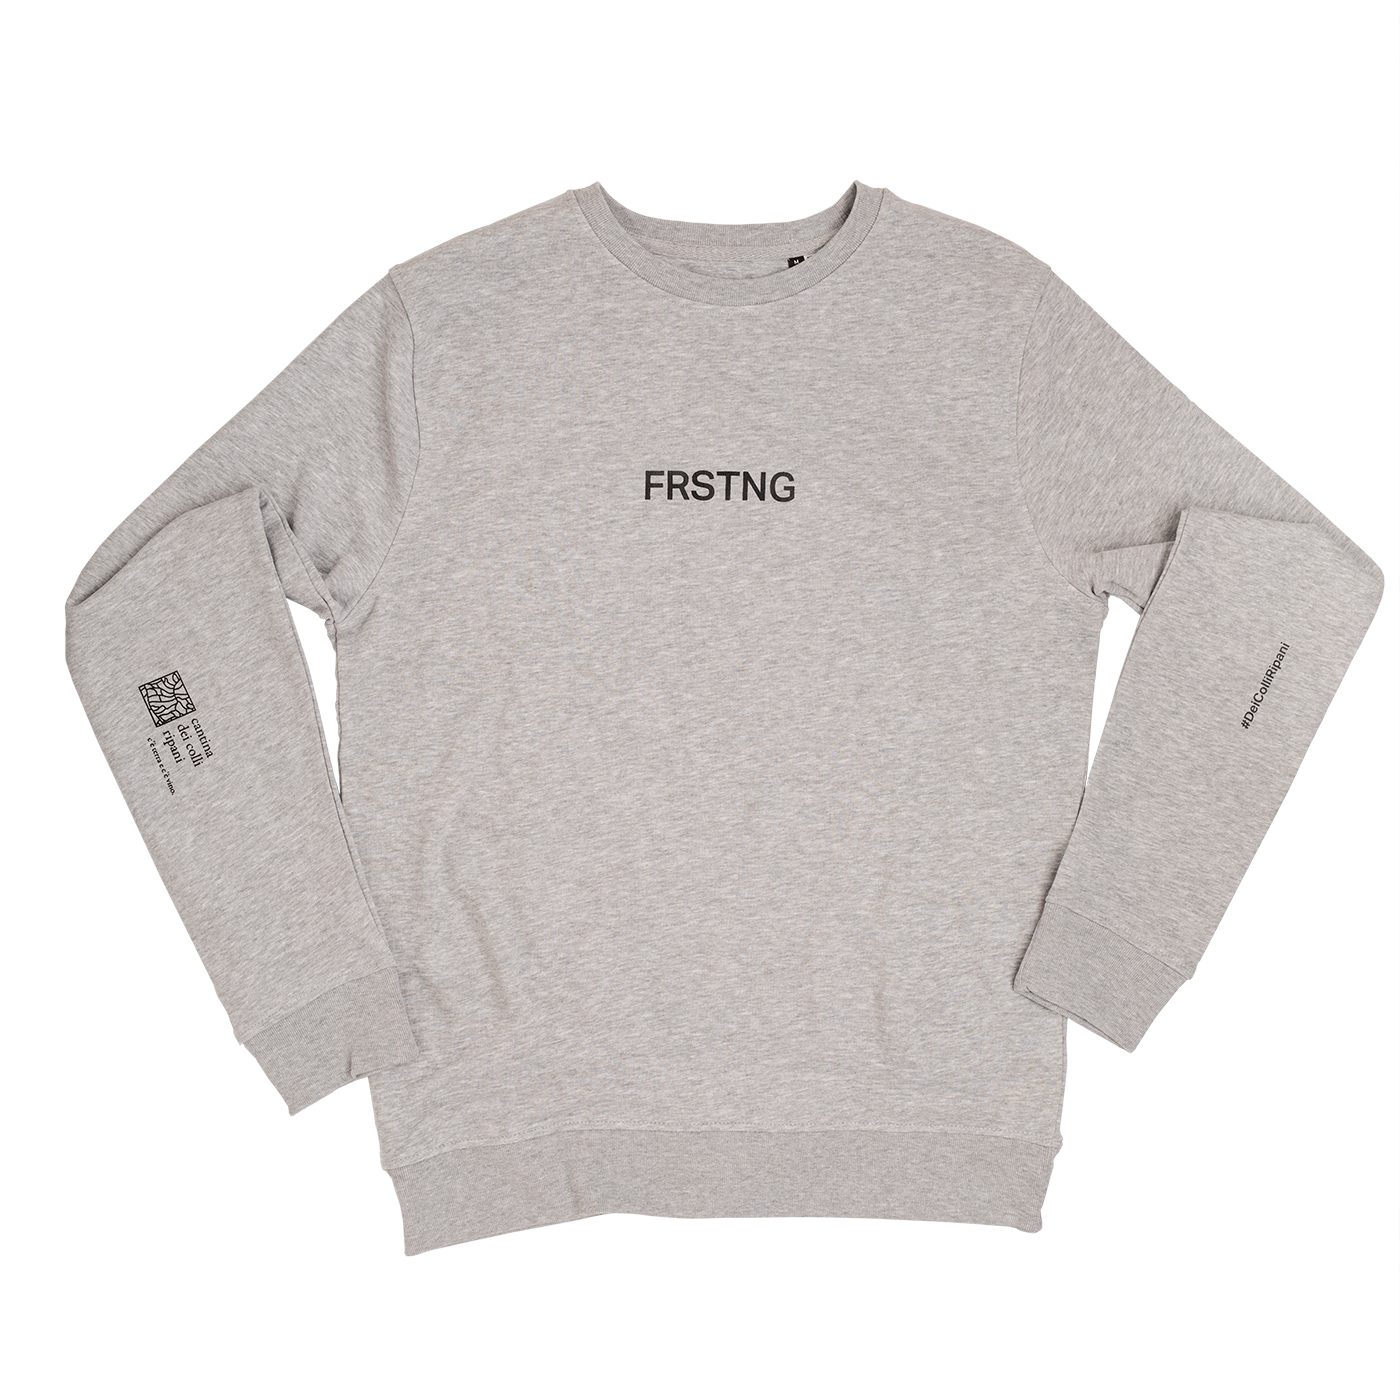 FRSTNG sweatshirt